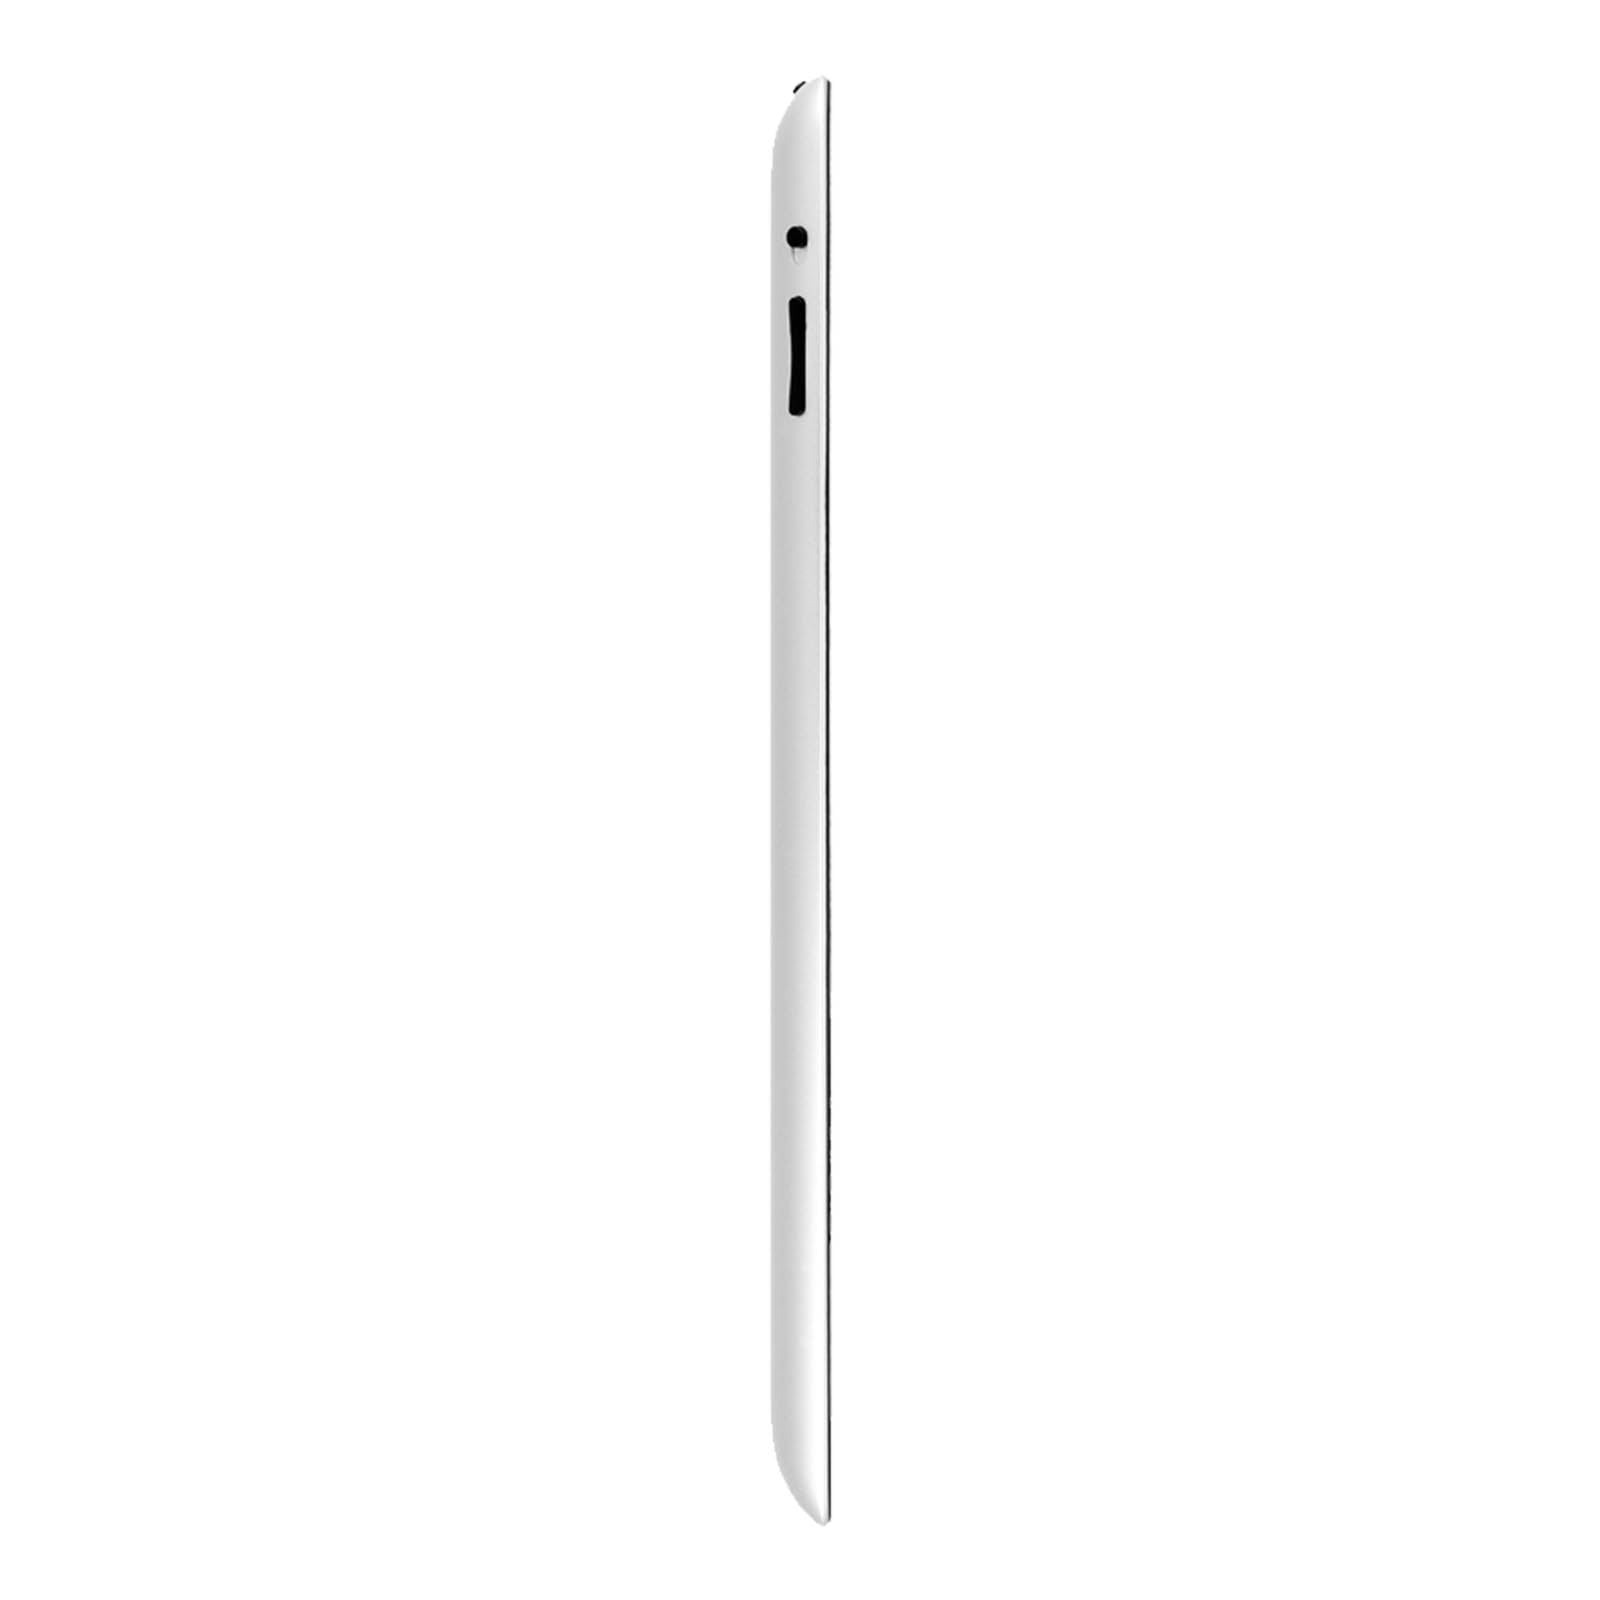 Apple iPad 3 16GB White Fair - Unlocked